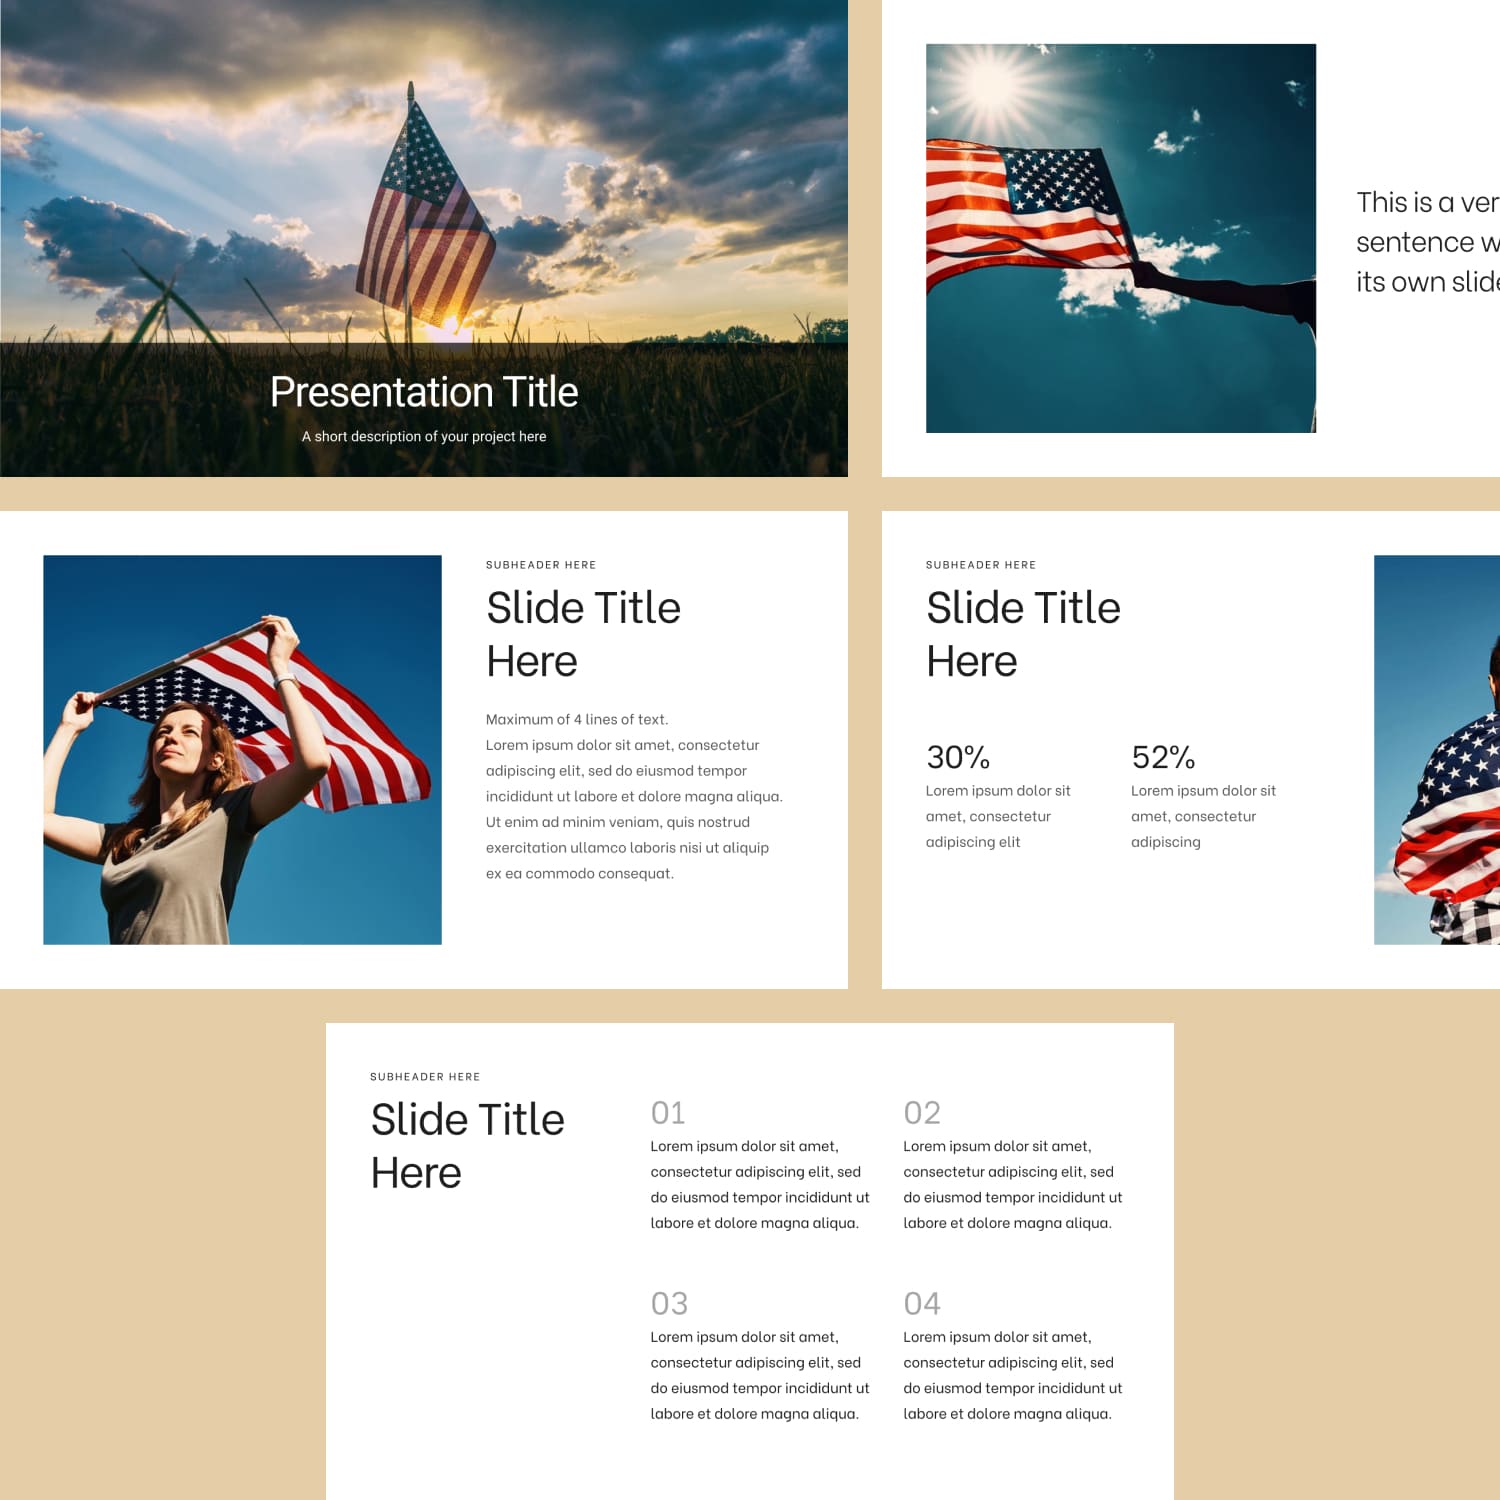 Preview of images of patriotic presentation slides.